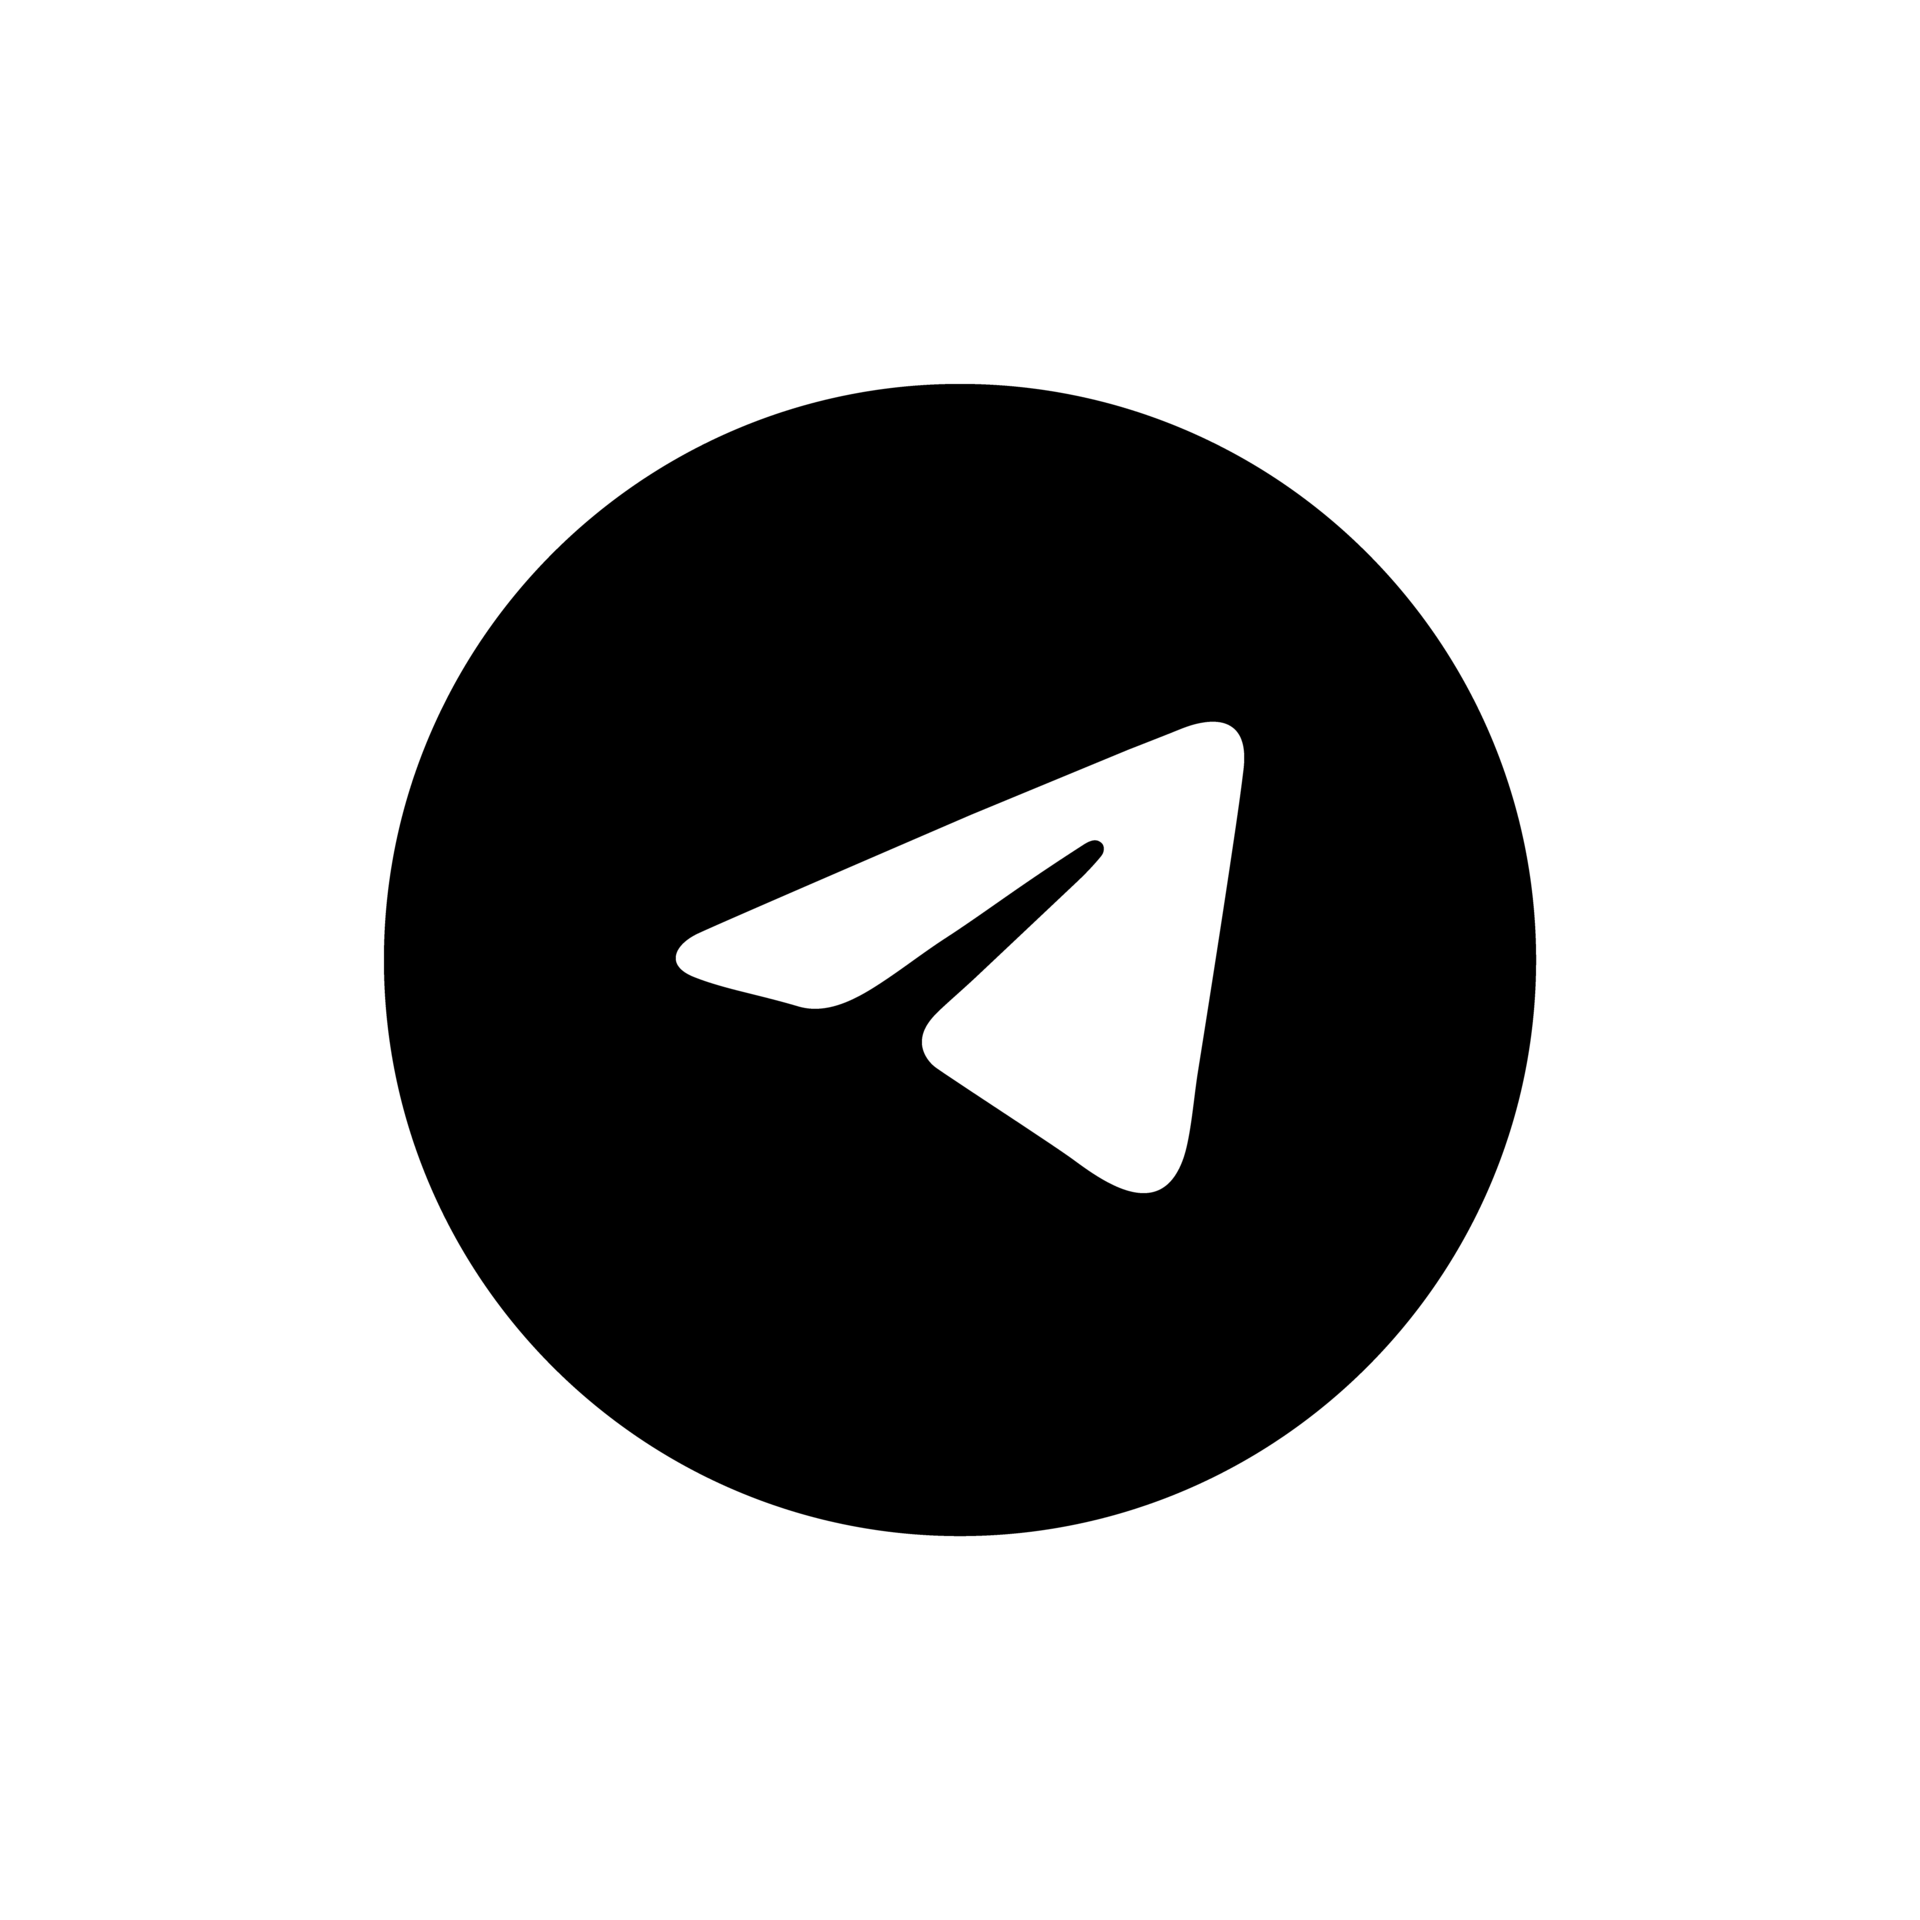 Telegram logo png, Telegram icon transparent png 18930486 PNG